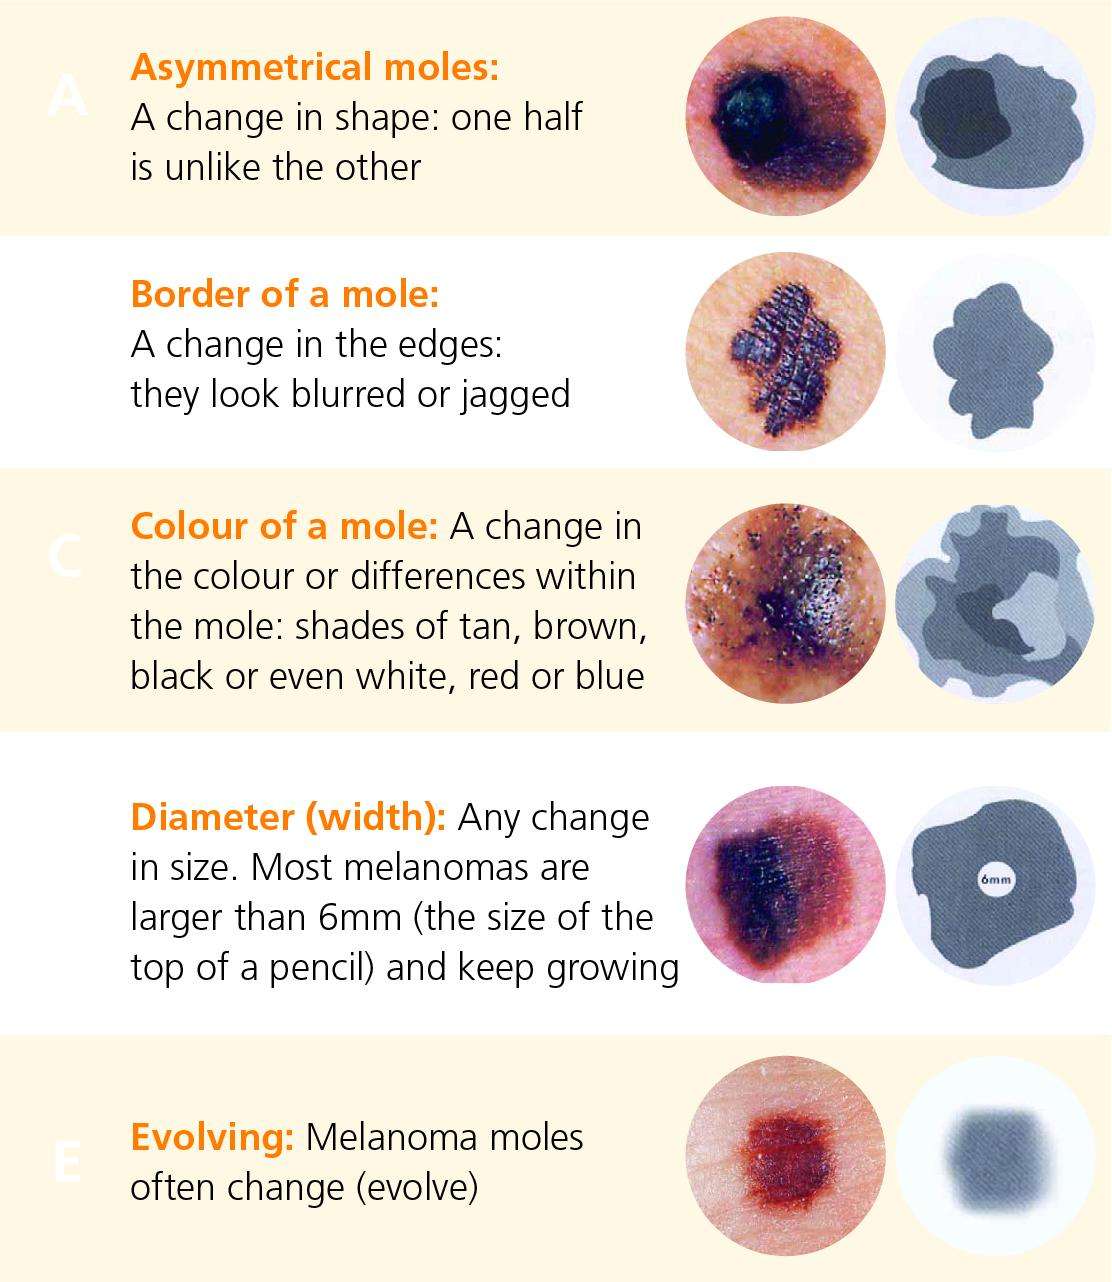 Symptoms and diagnosis of melanoma